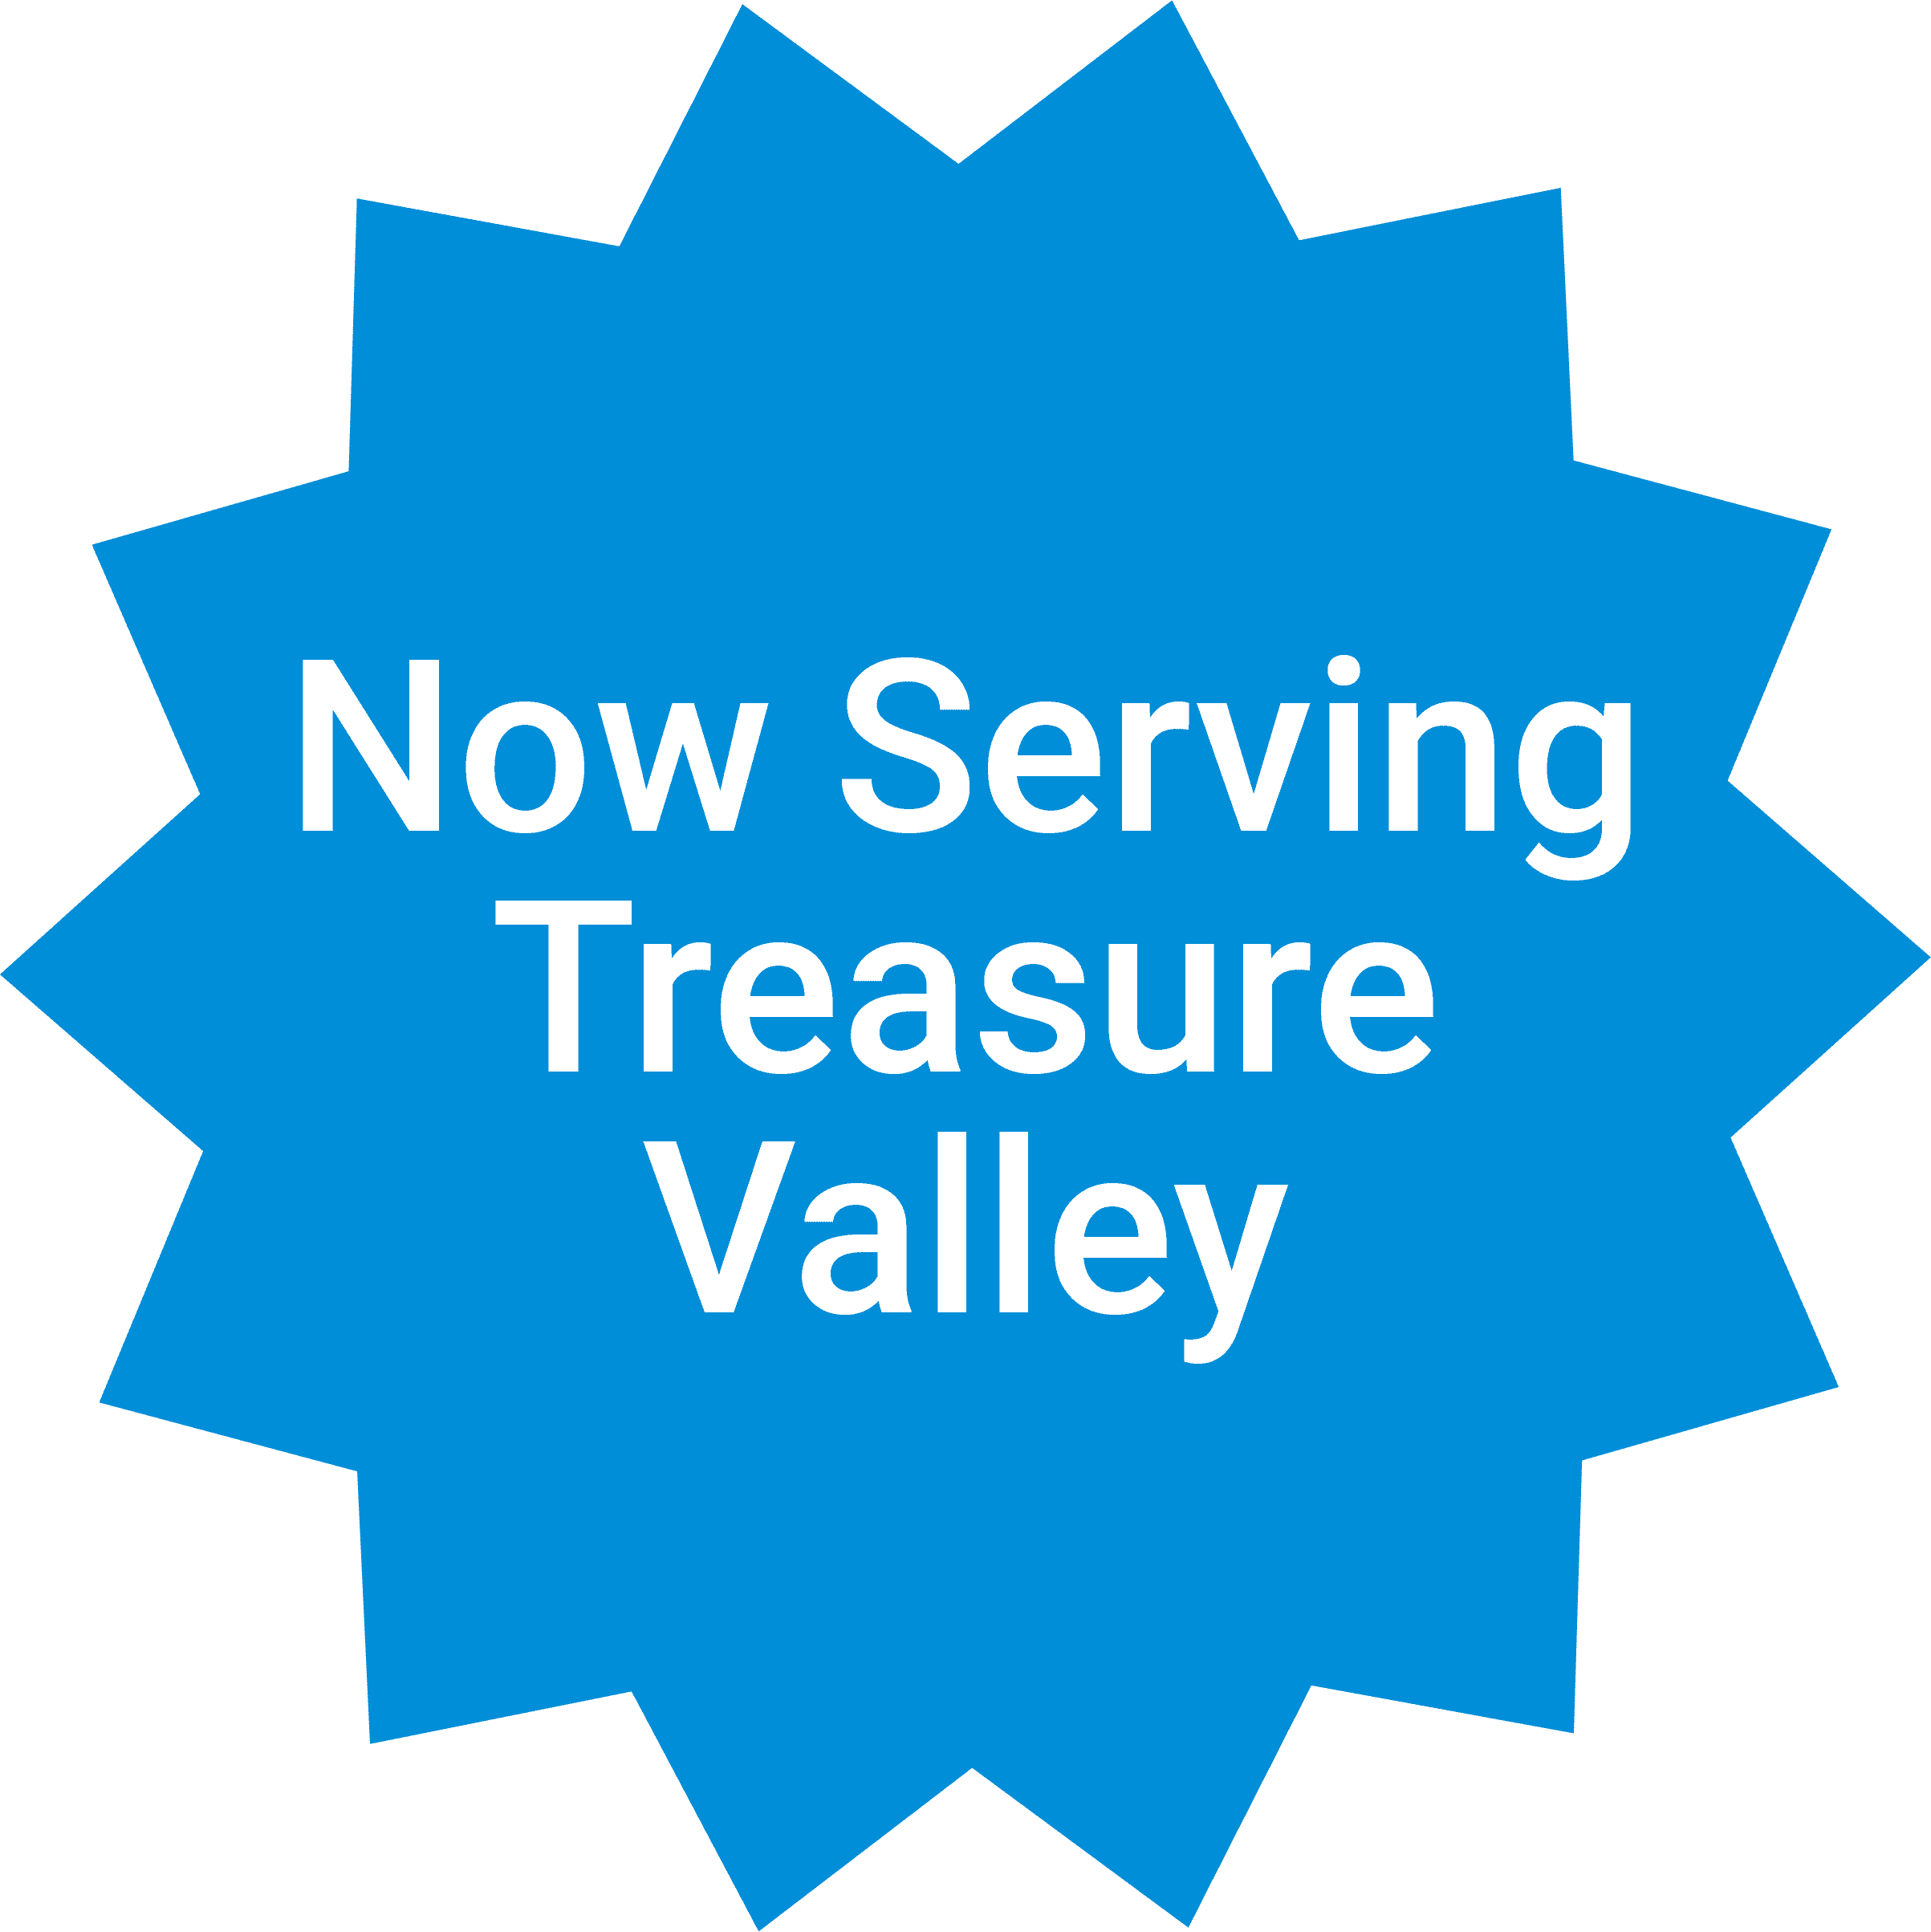 Now Serving Treasure Valley!